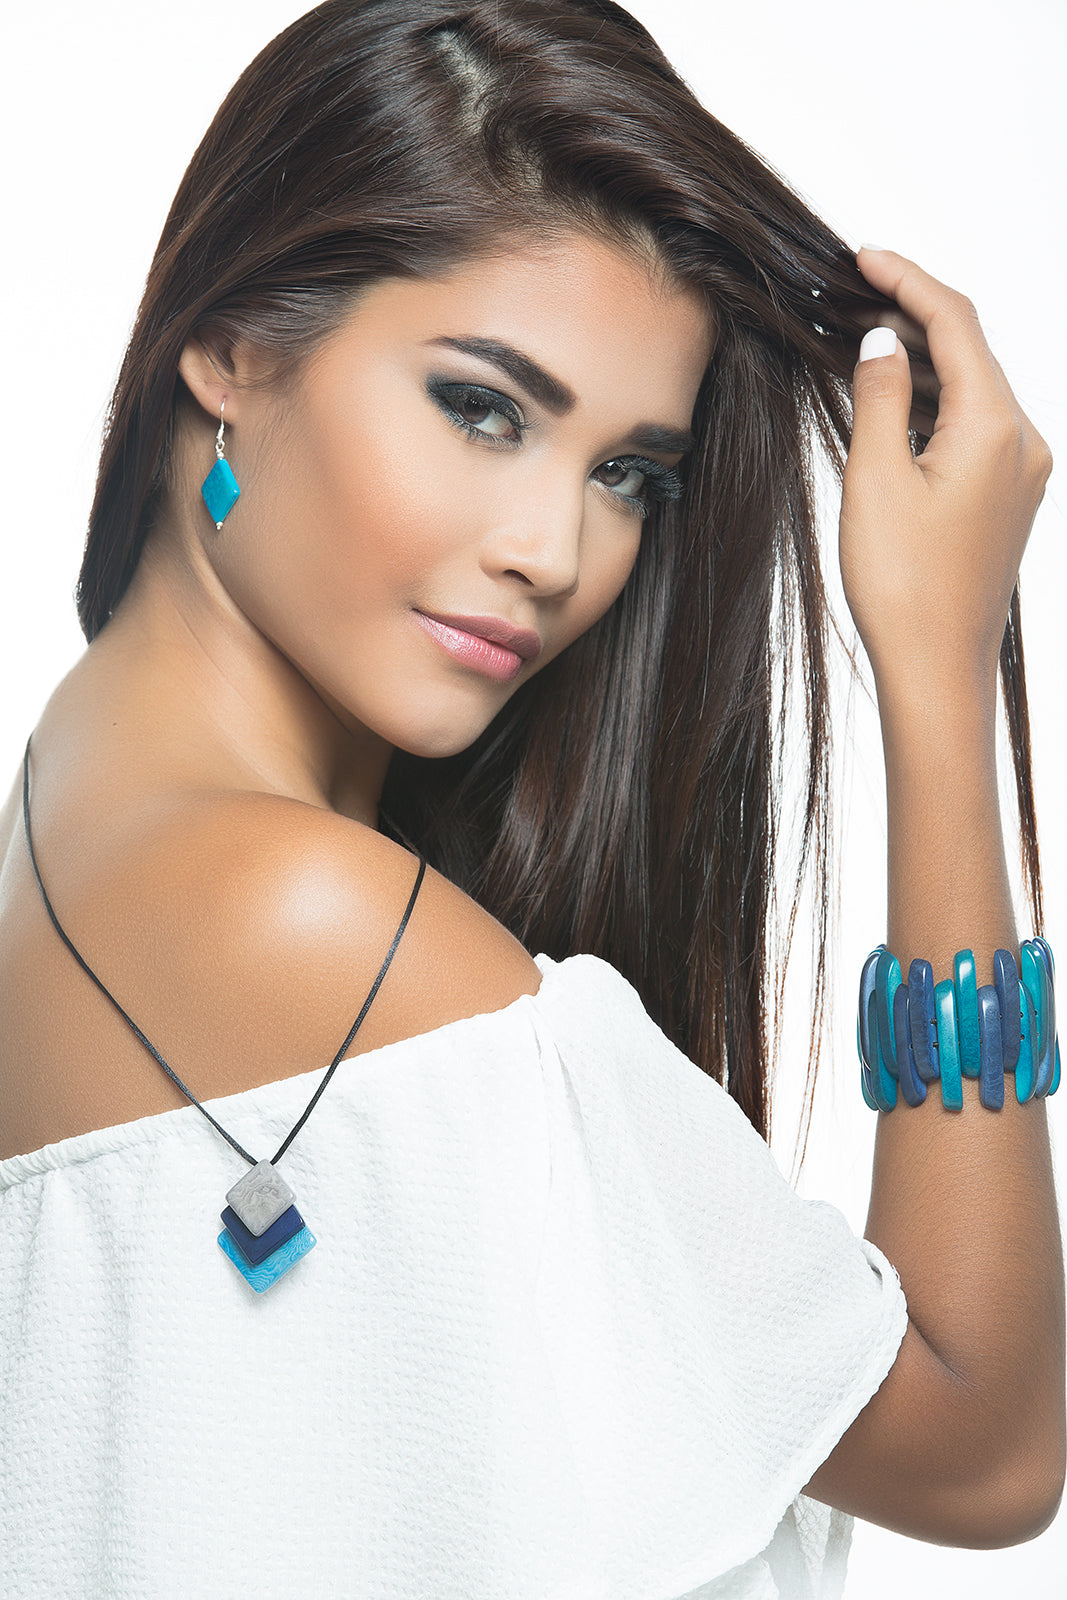 Diamante earrings (18mm) - Turquoise